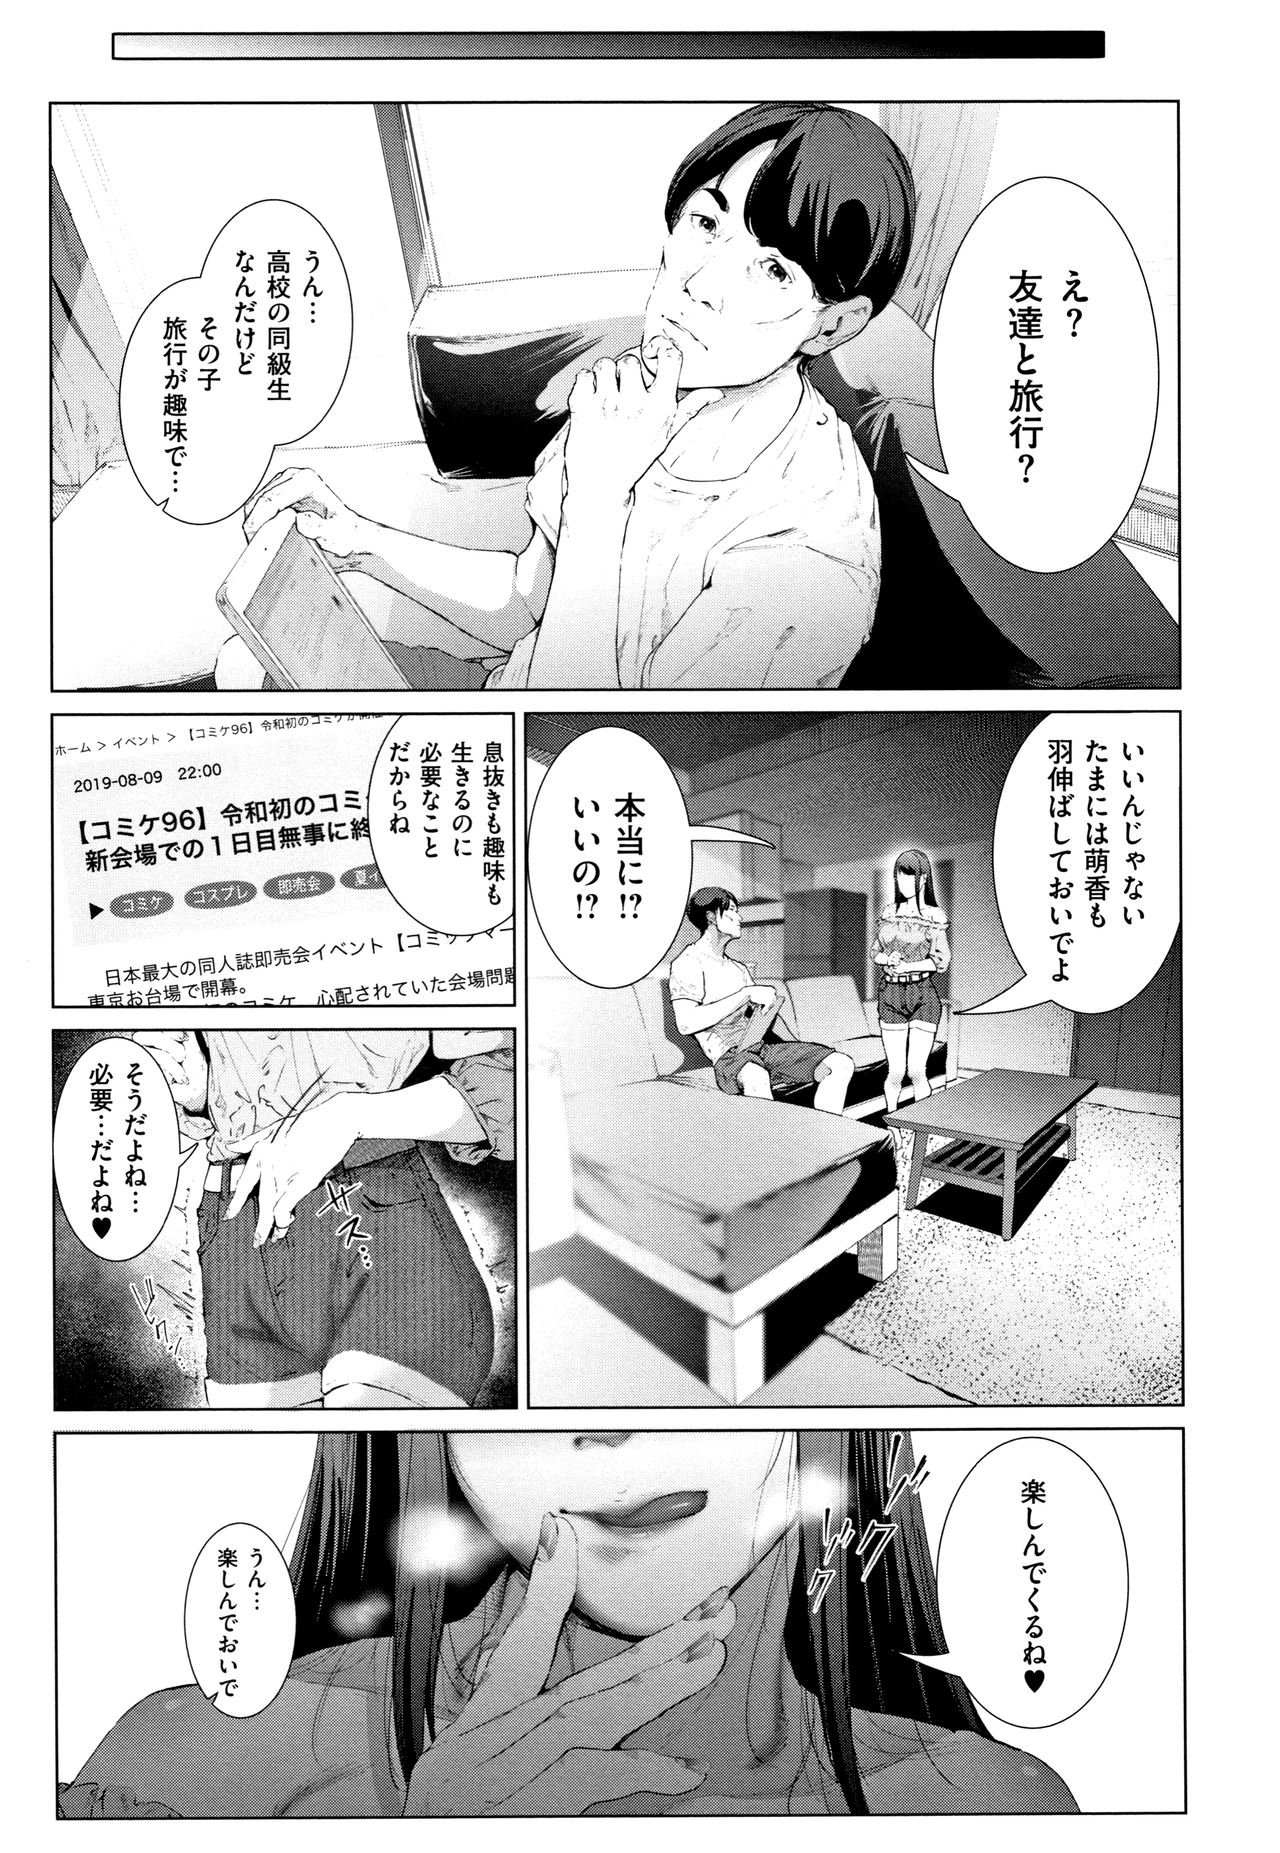 [Suzuhane Suzu] Cos wa Midara na Kamen Shogyouban - Cosplay is a mask [wakes up erotic personality...] 83